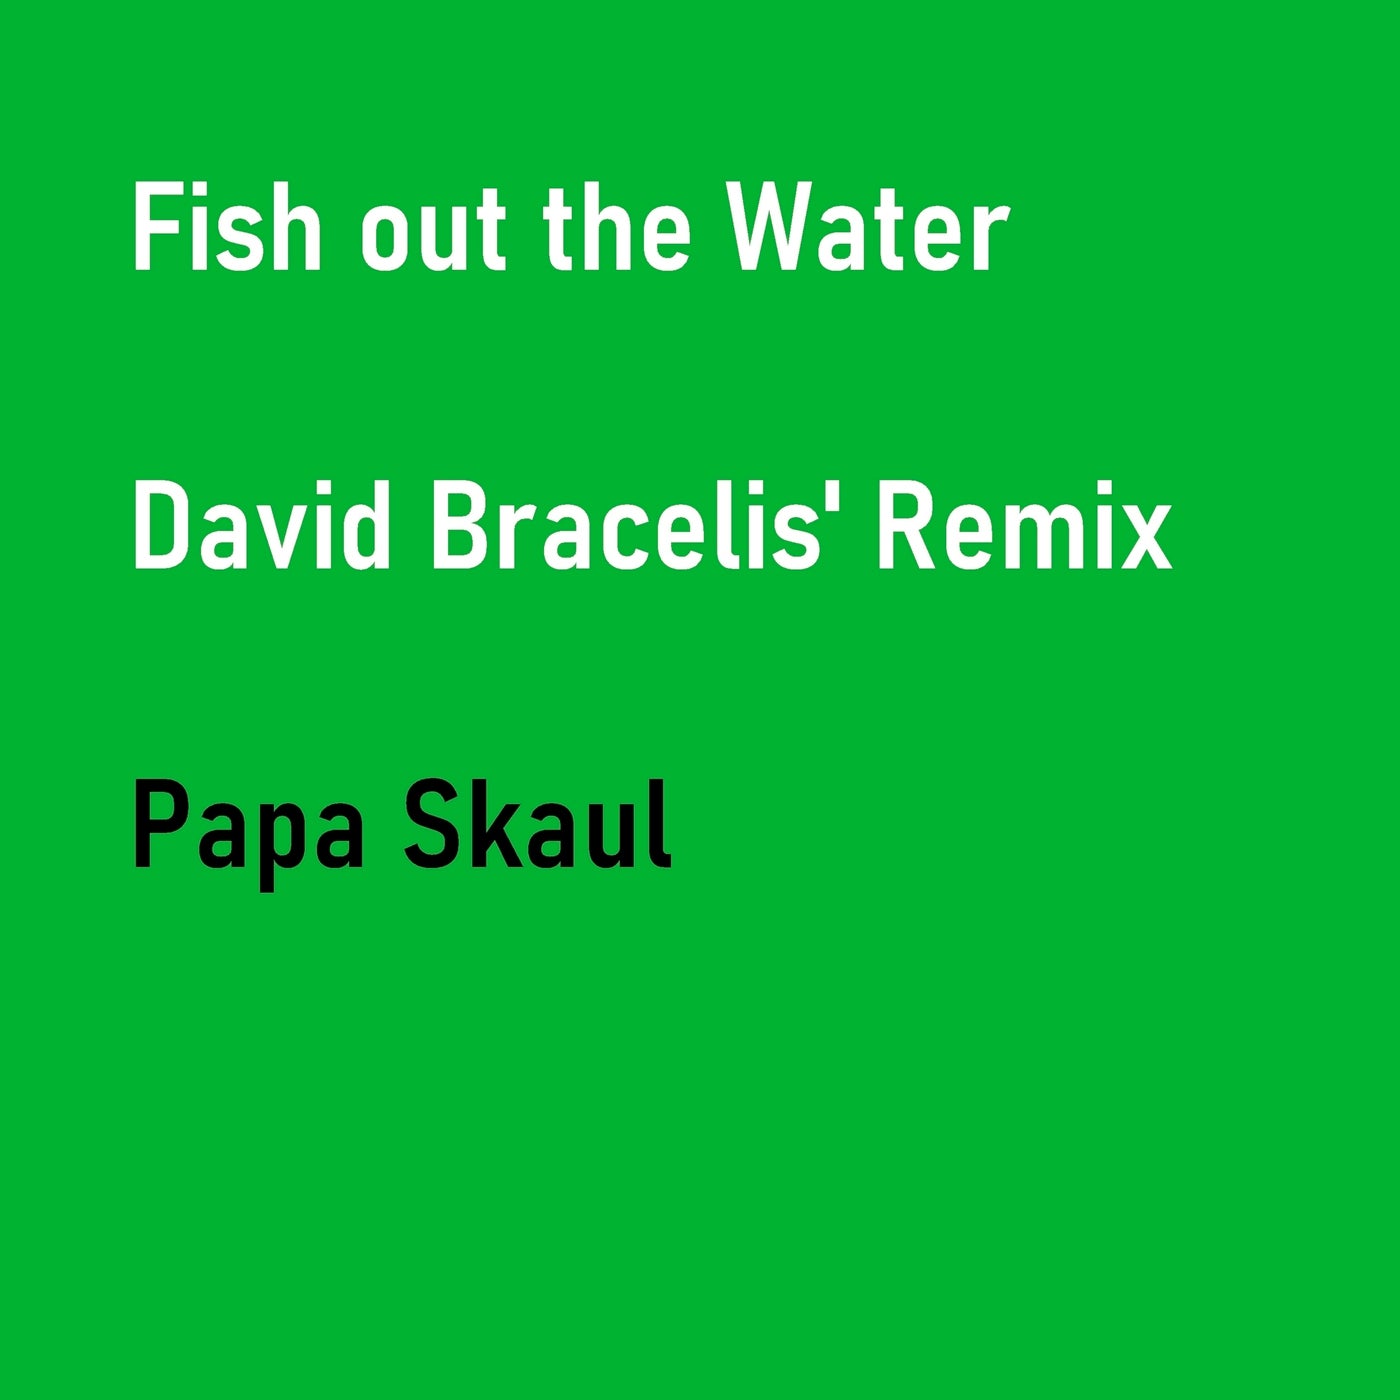 Fish out the Water (David Bracelis' Remix)